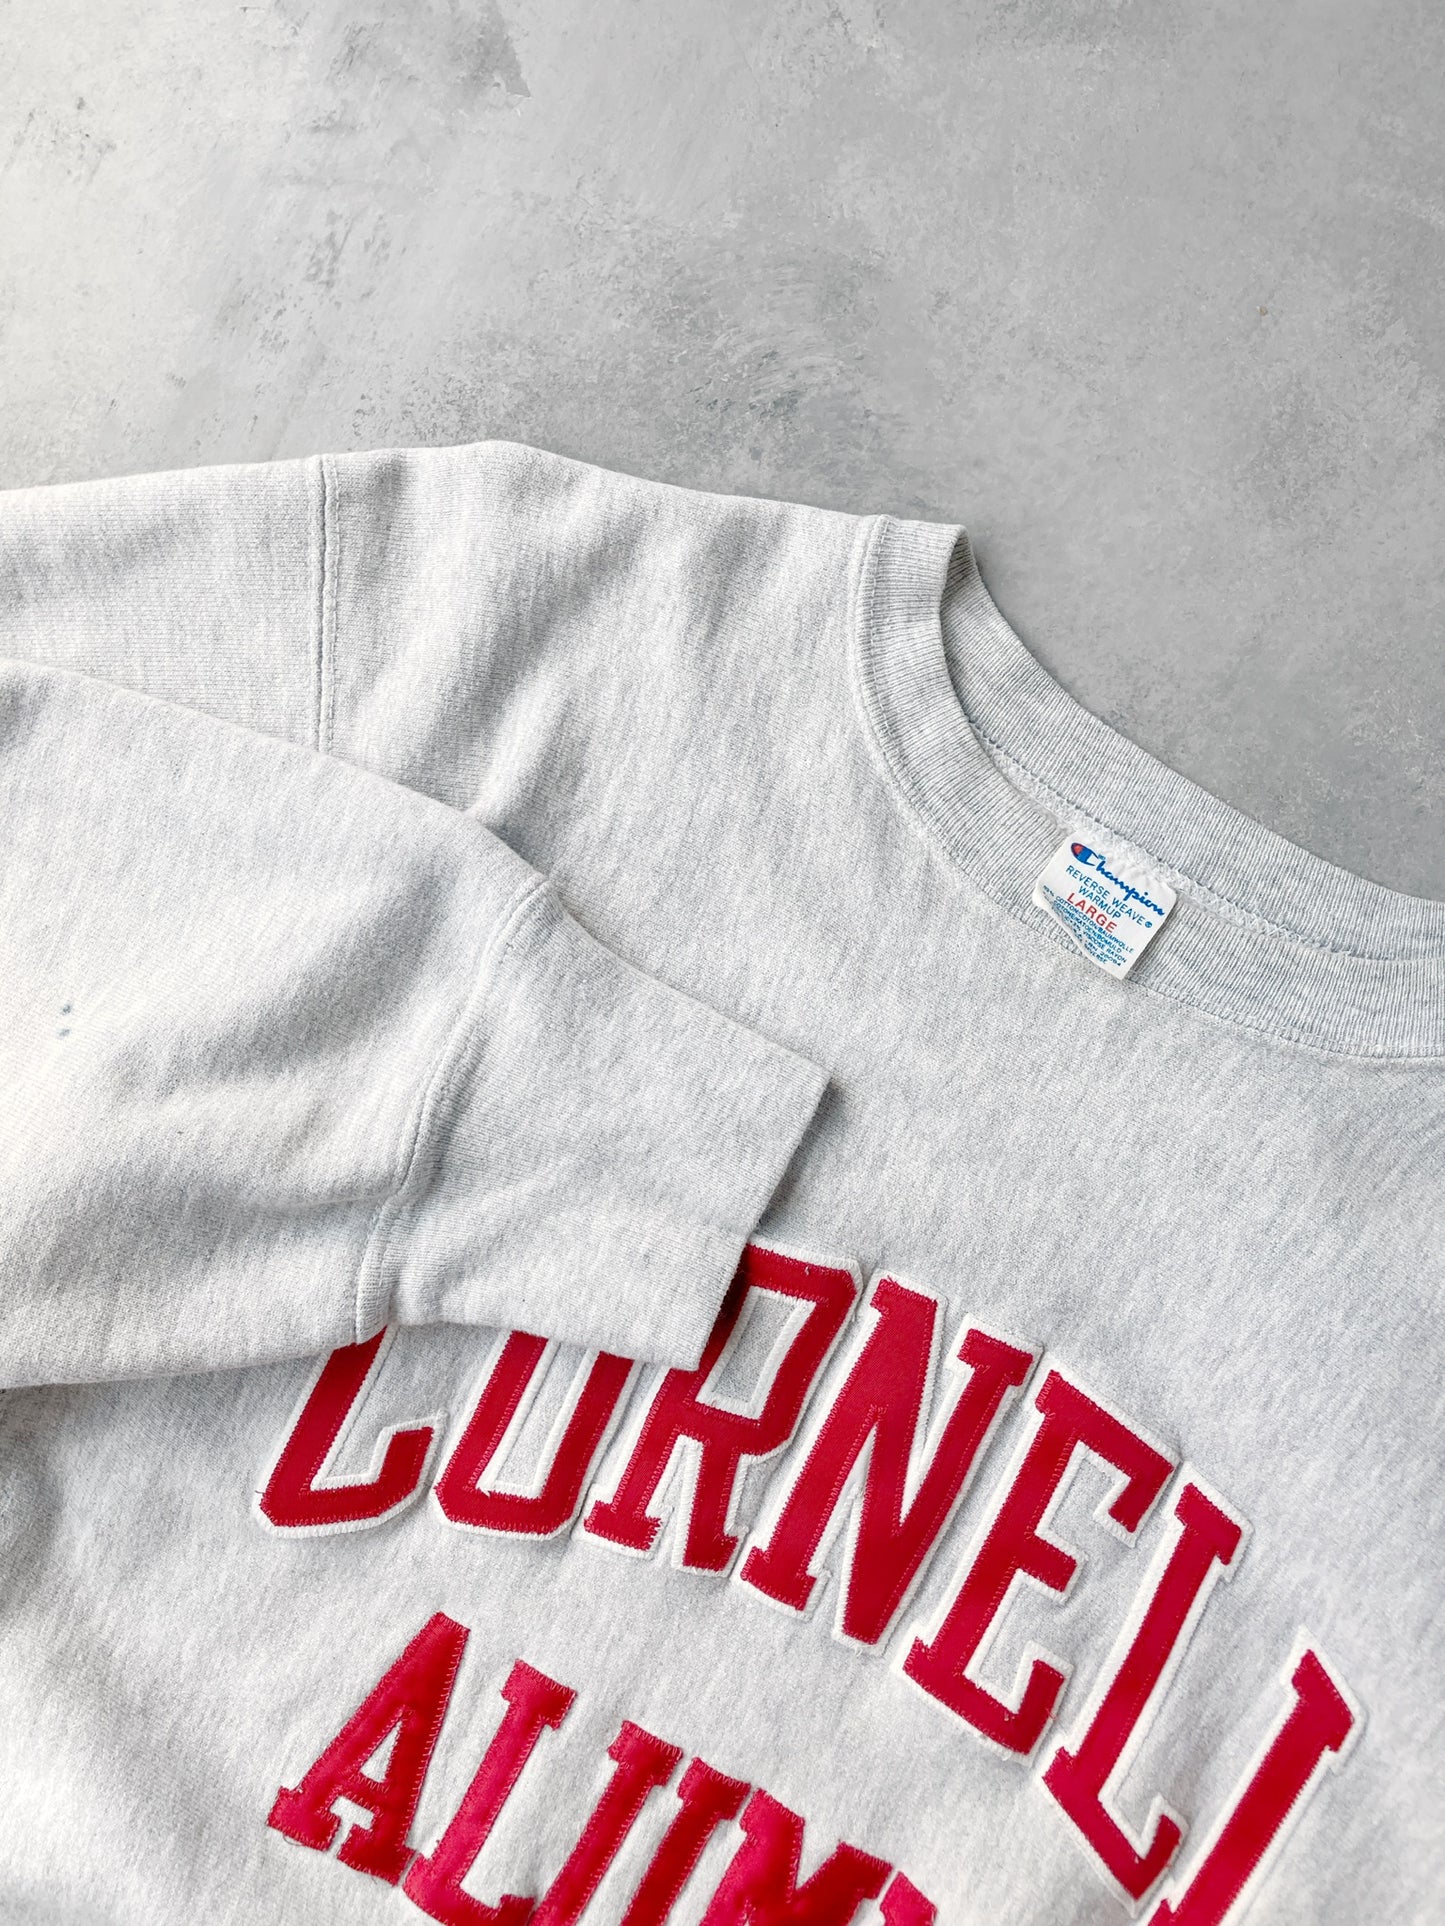 Cornell Alumni Reverse Weave Sweatshirt 80's - Large